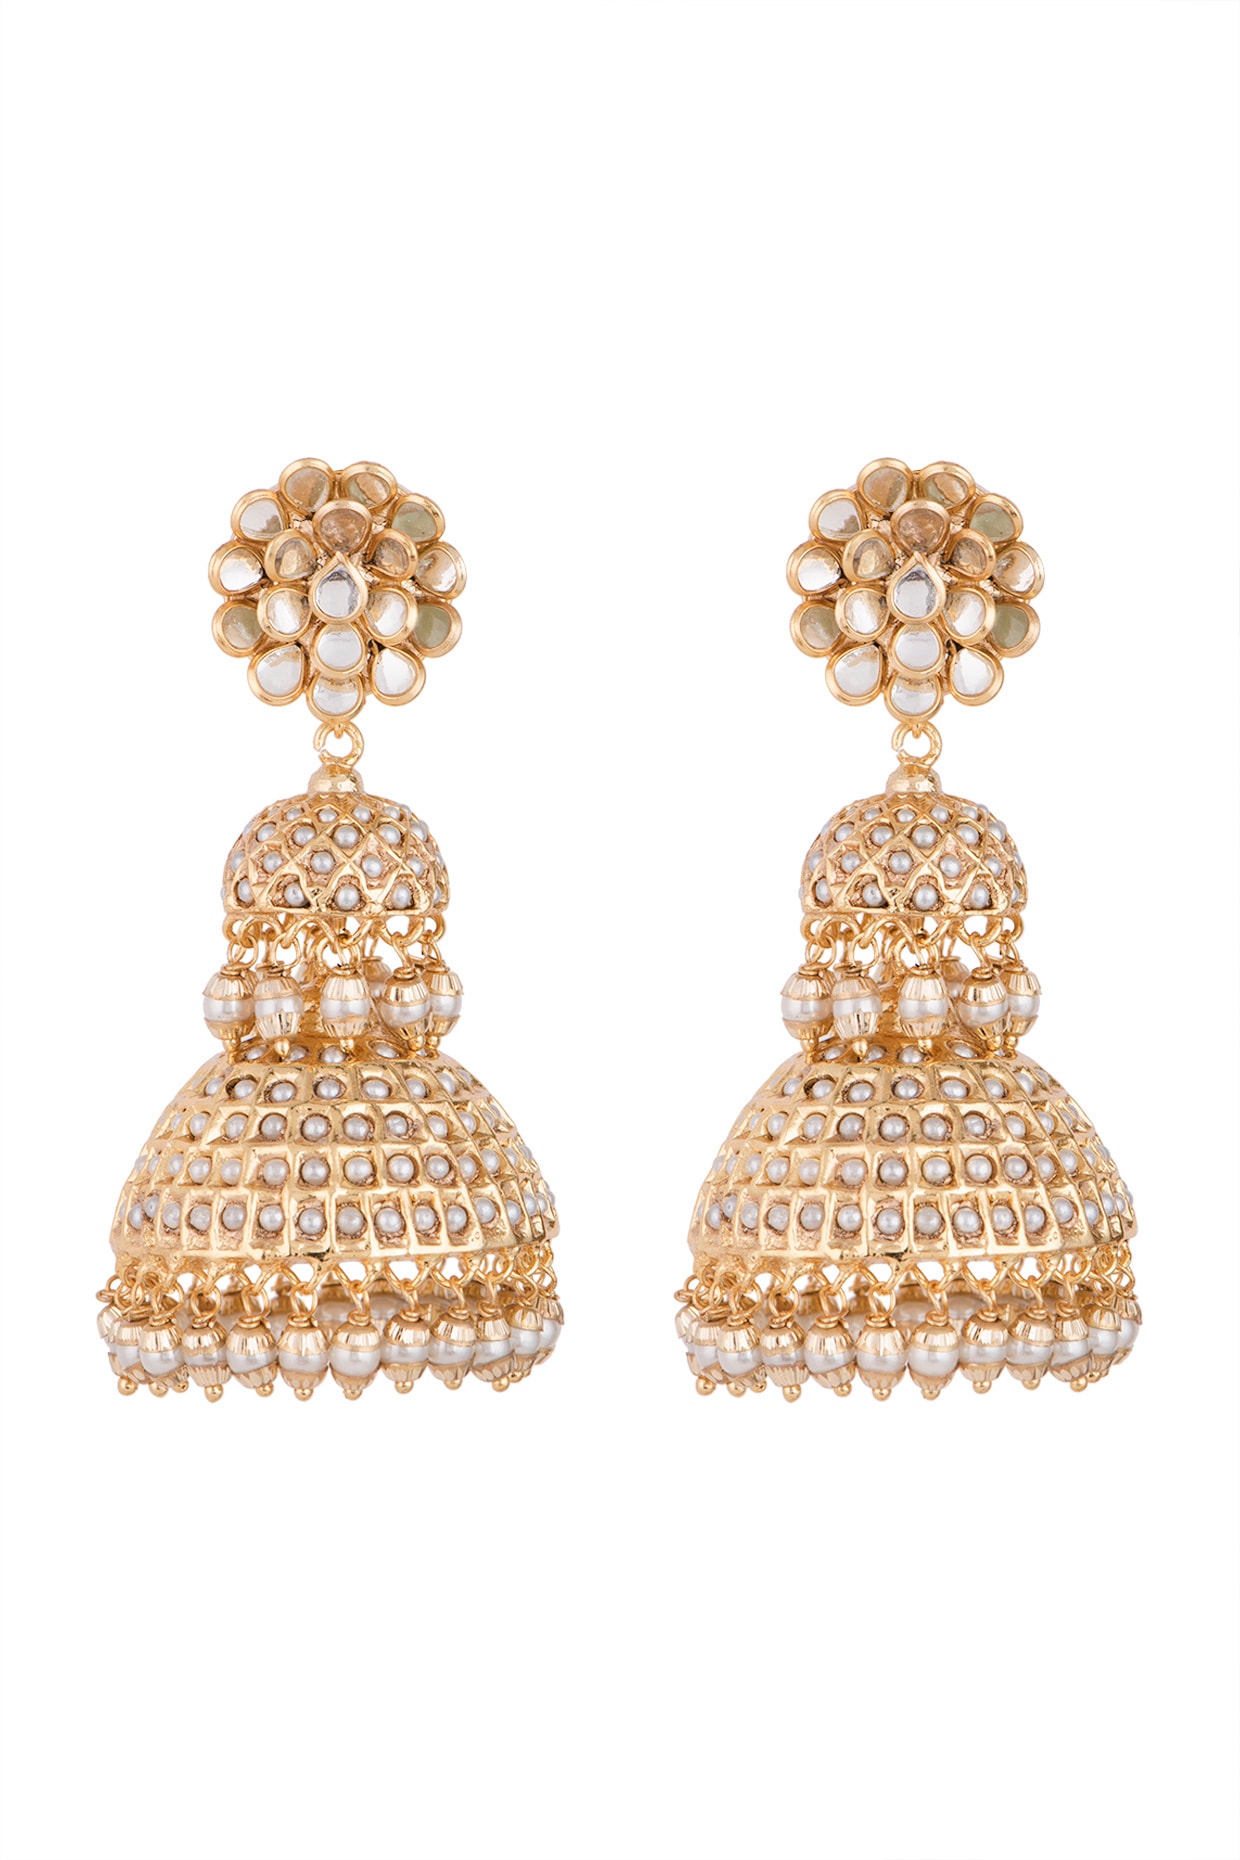 Ladies Gold Earring - Rajputi Gold Earrings Retail Trader from Jaipur